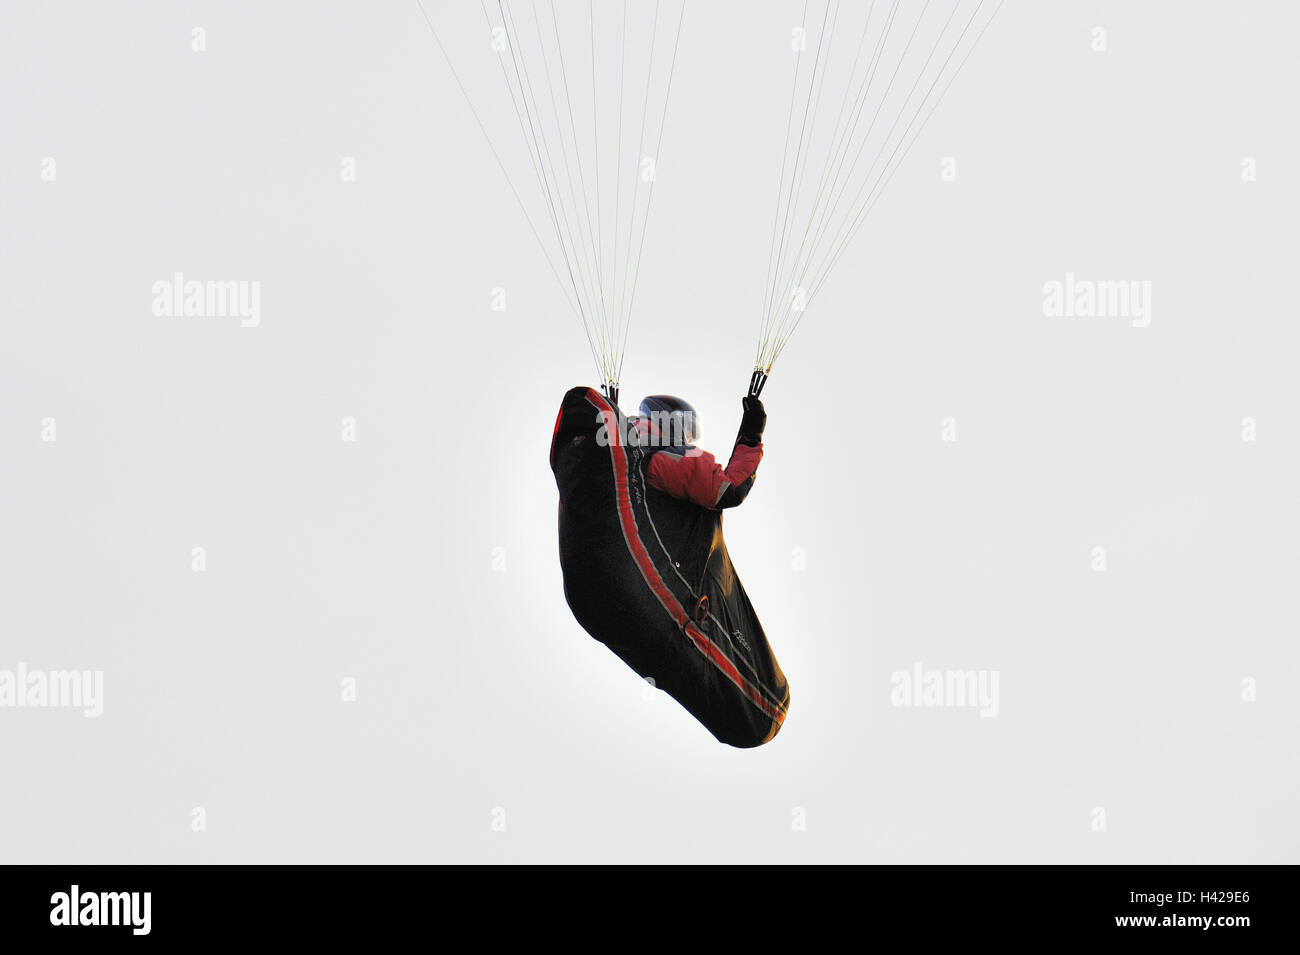 Paraglider plane, Stock Photo